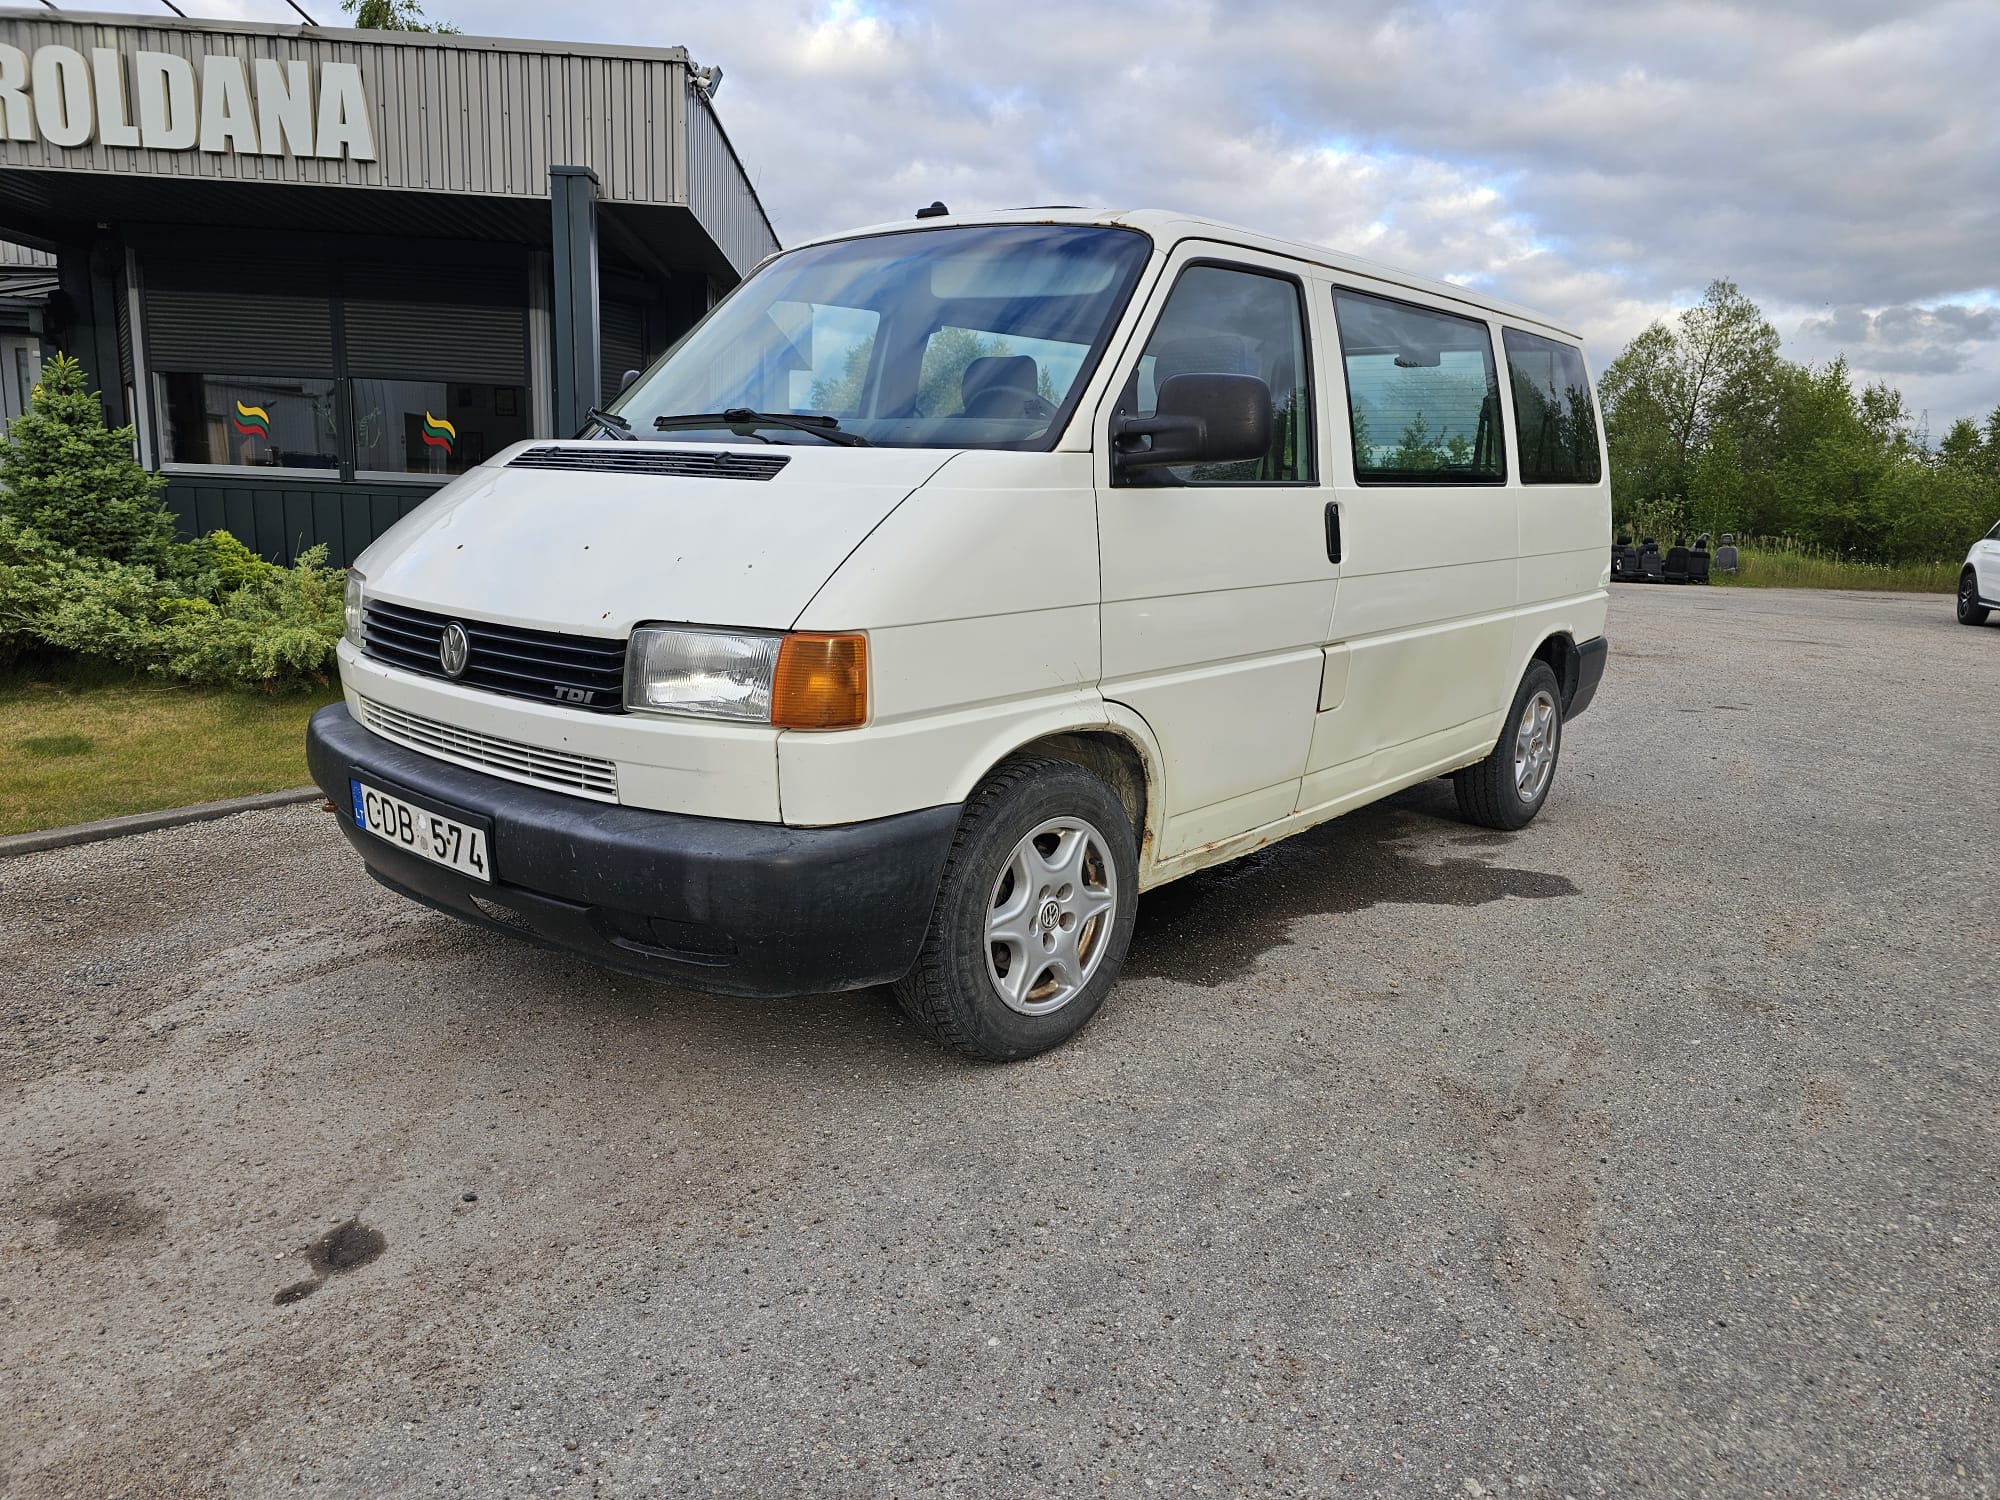 Volkswagen Transporter, 2.5 l., Пассажирский микроавтобус, 2000/naudoti automobiliai/Roldana